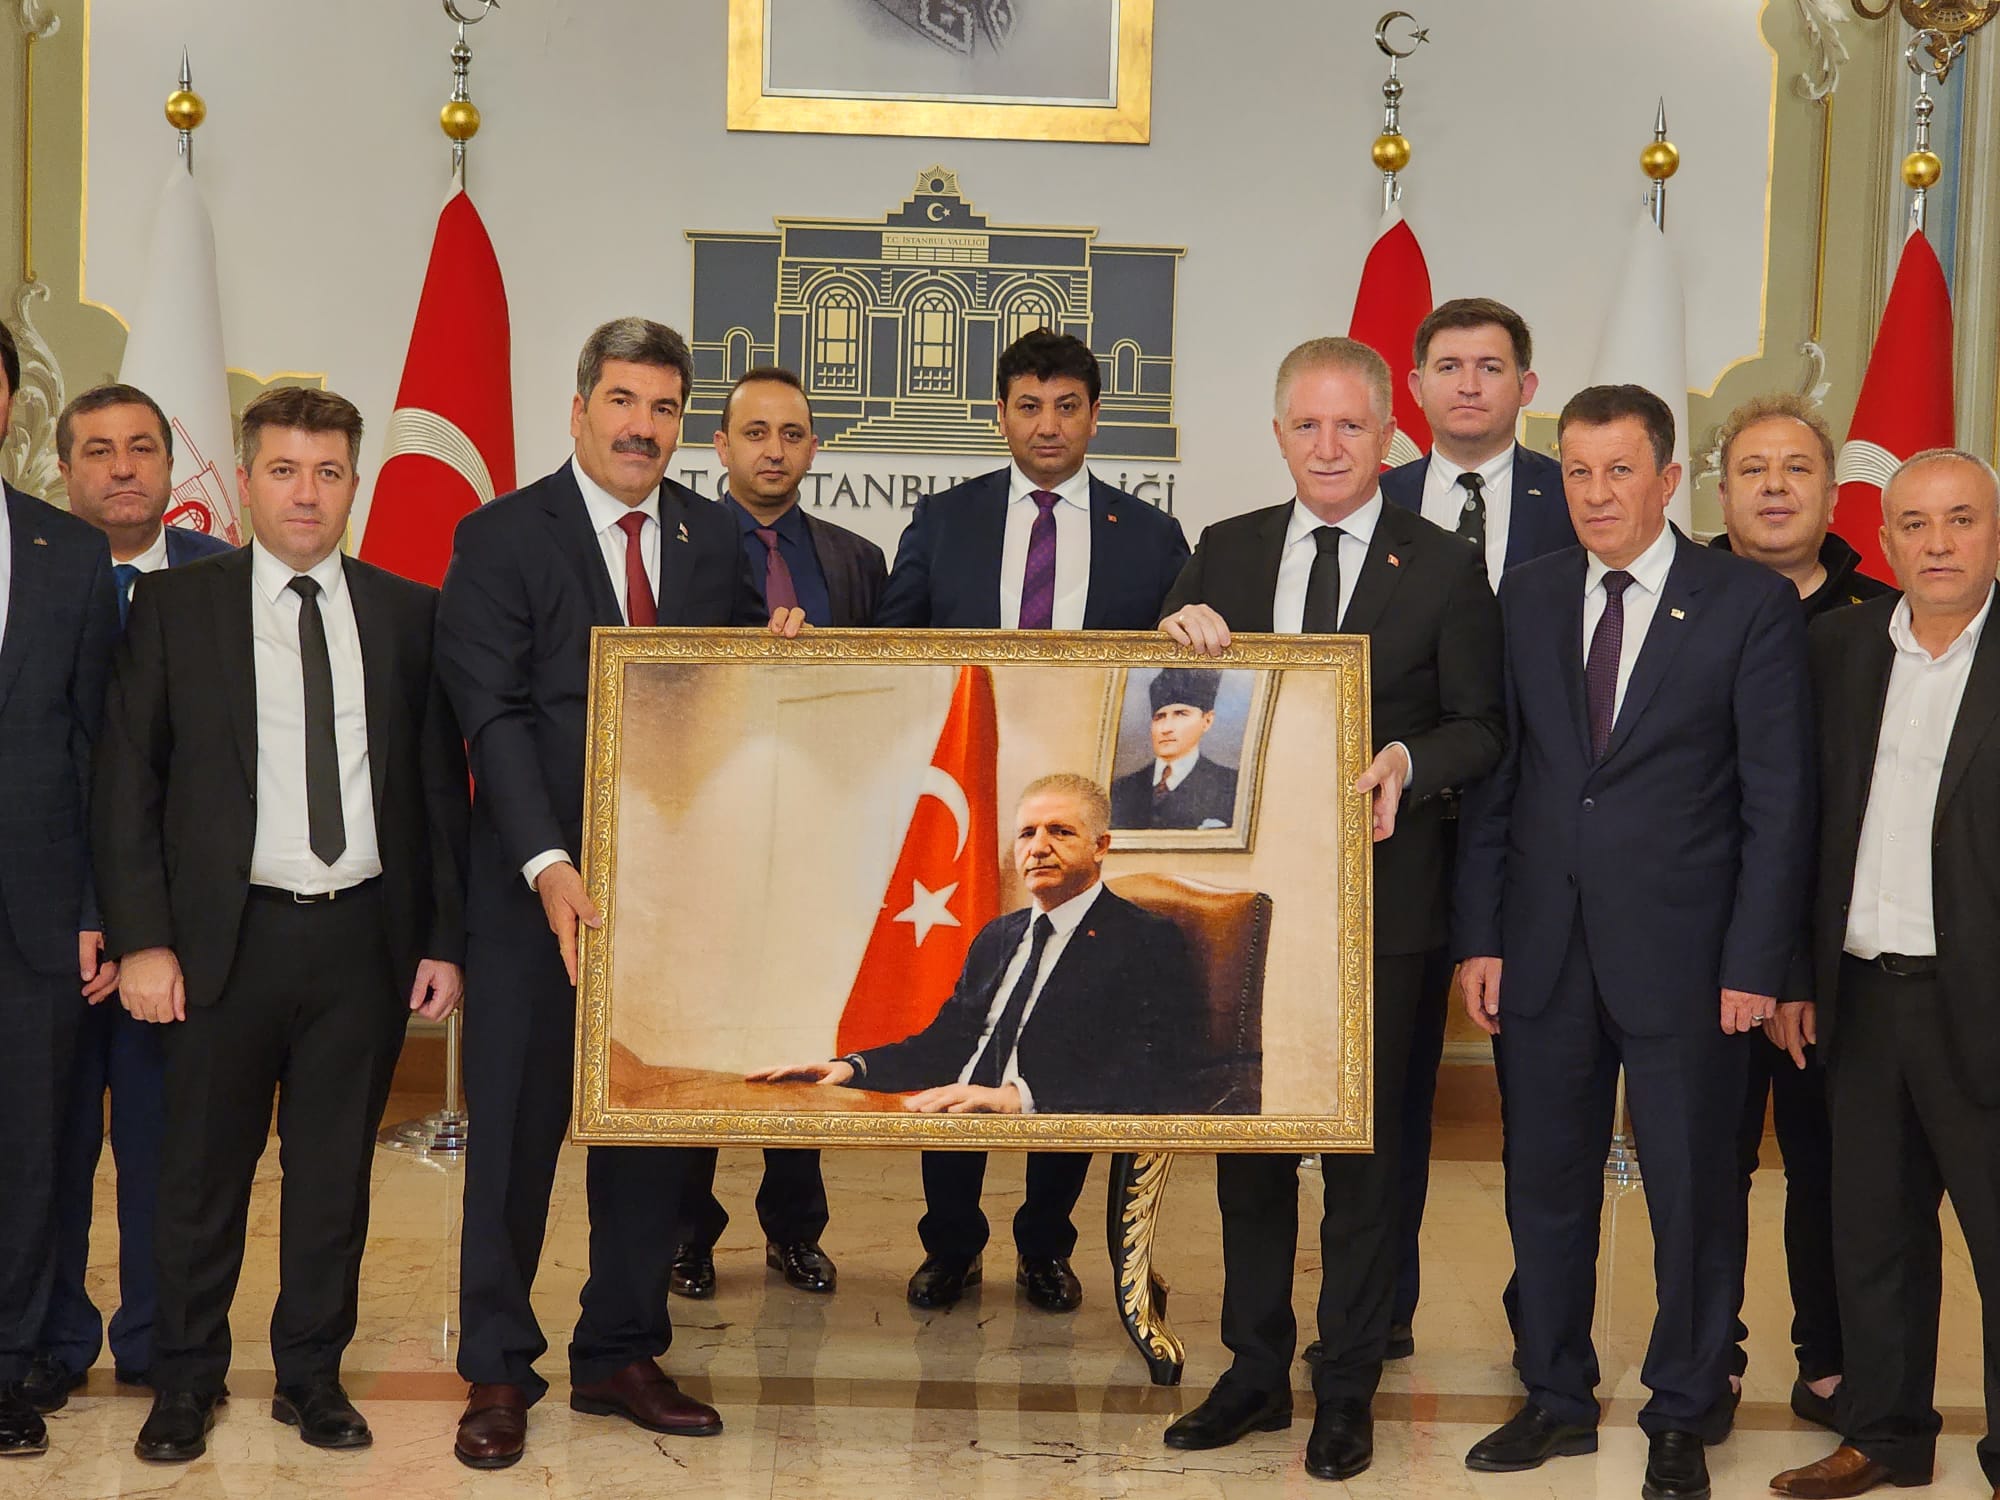 Gaziantepli Halı İhracatçıları İstanbul Valisi Davut Gül’ü Ziyaret Etti